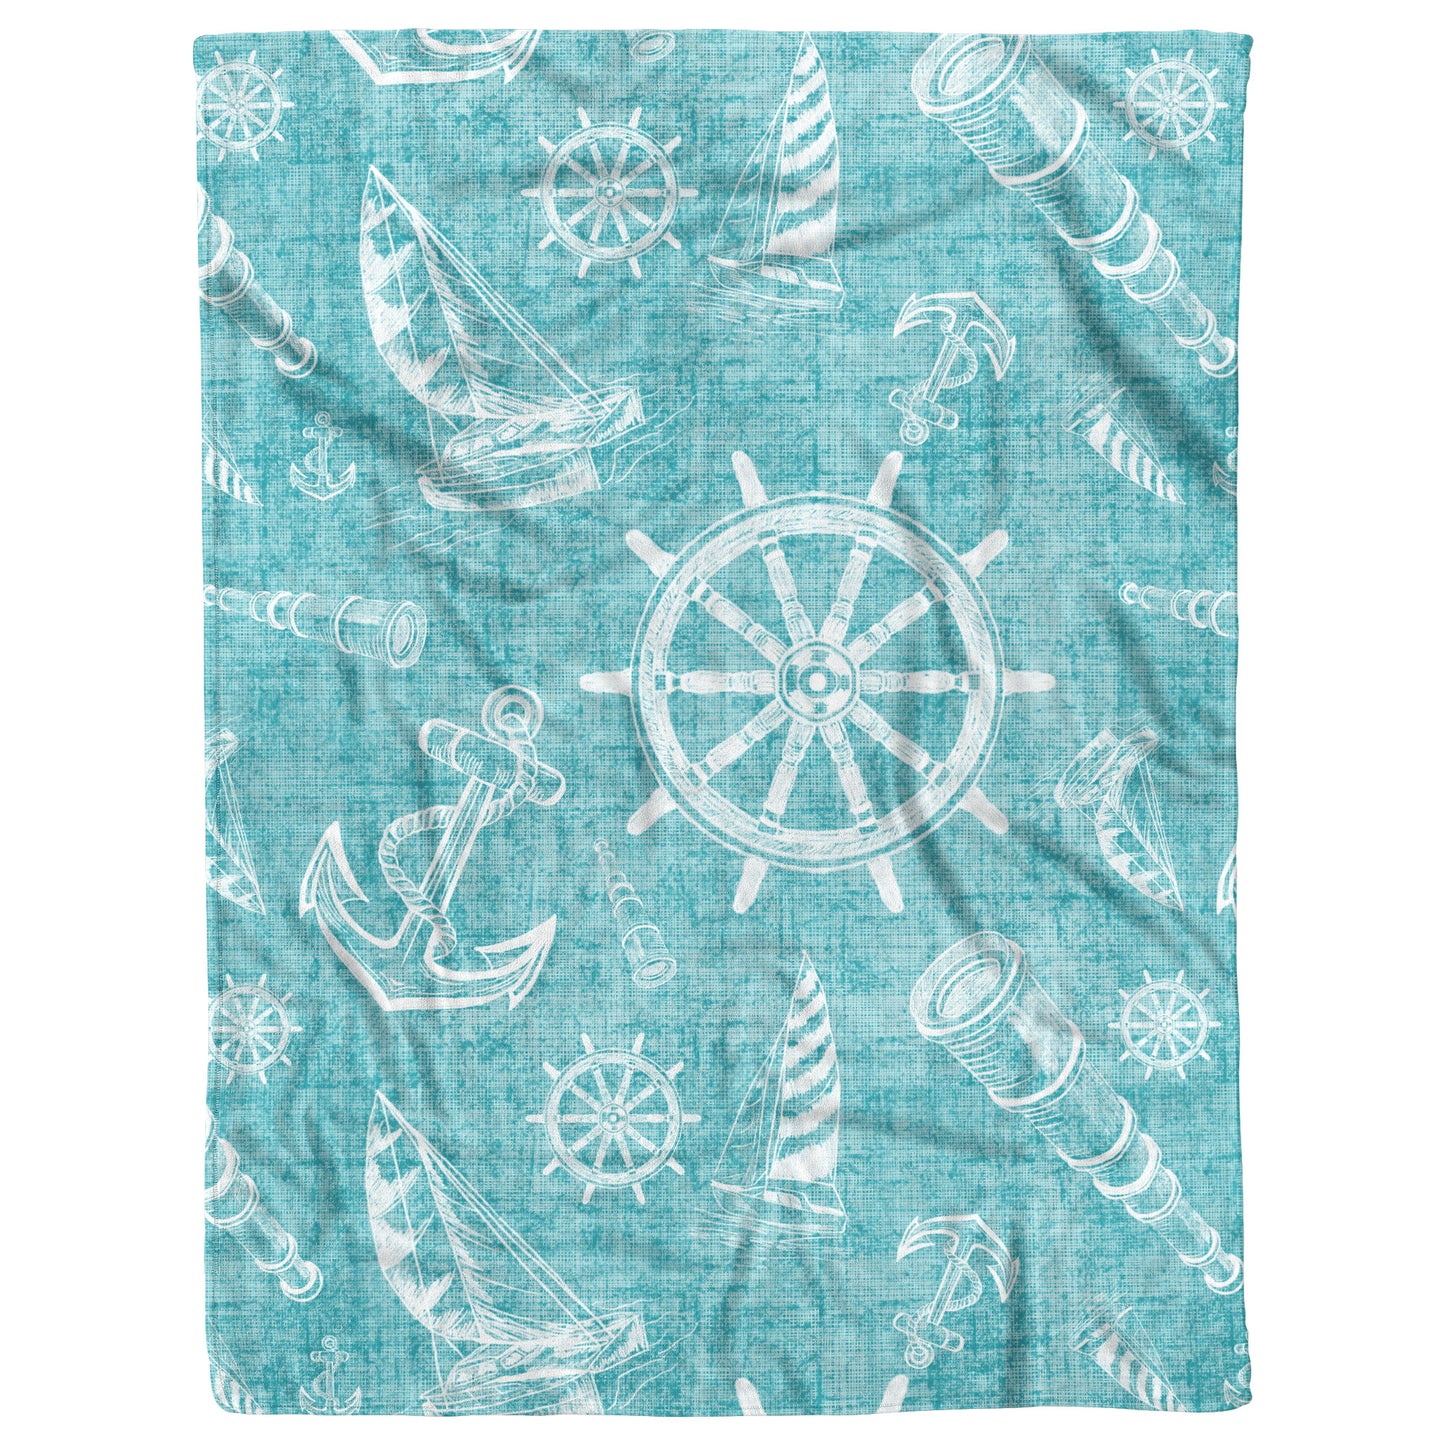 Nautical Sketches on Teal Linen Texture Background, Fleece Blanket